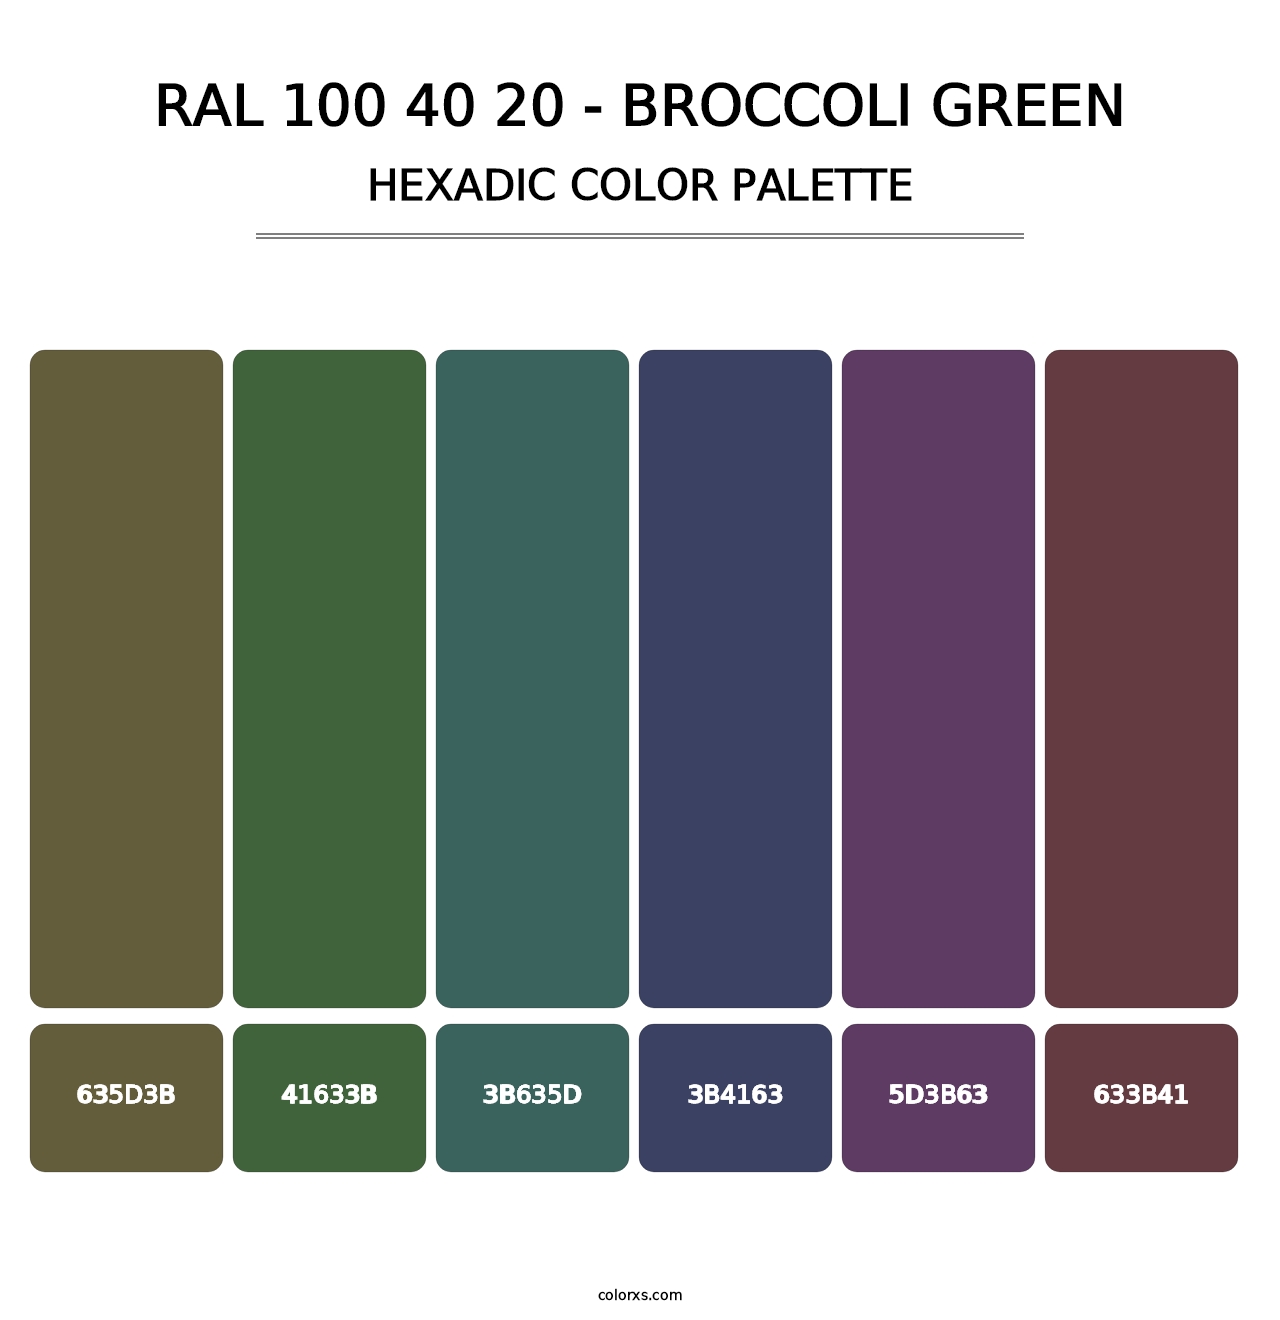 RAL 100 40 20 - Broccoli Green - Hexadic Color Palette